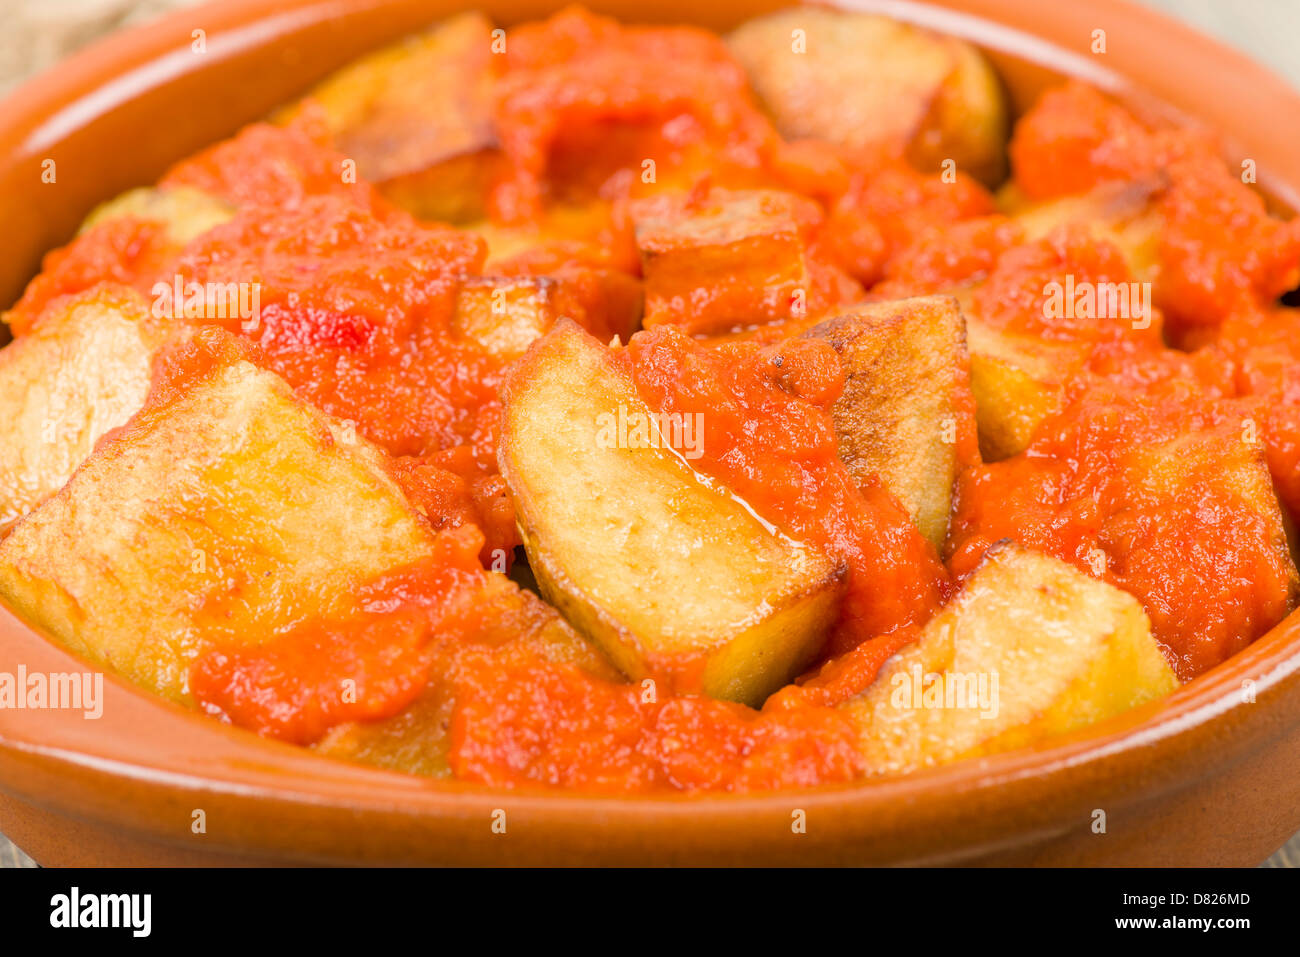 Patatas Bravas - Crispy potato chunks in spicy tomato sauce. Traditional Spanish tapas dish. Stock Photo